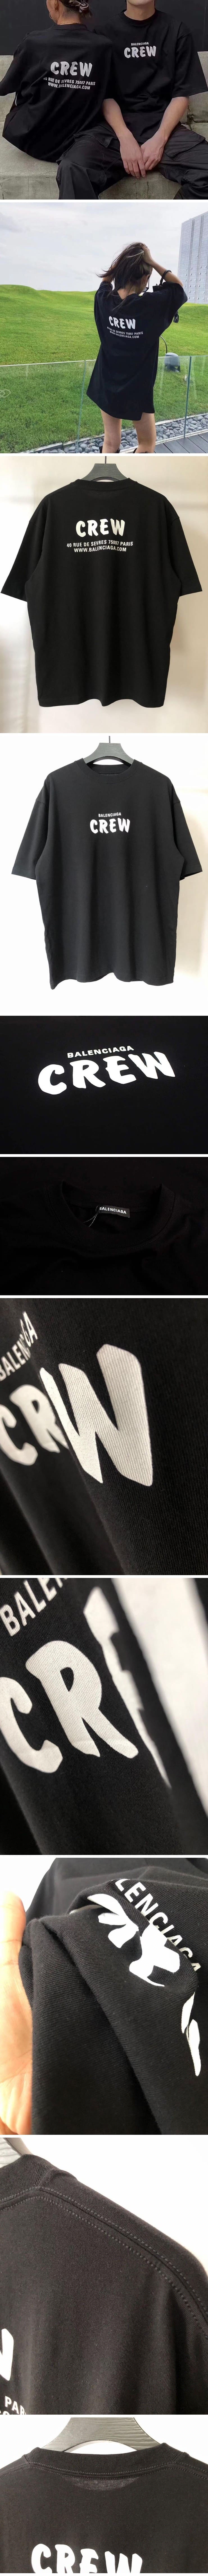 Balenciaga Crew Oversized Tee Black バレンシアガ クルー オーバーサイズ Tシャツ ブラック